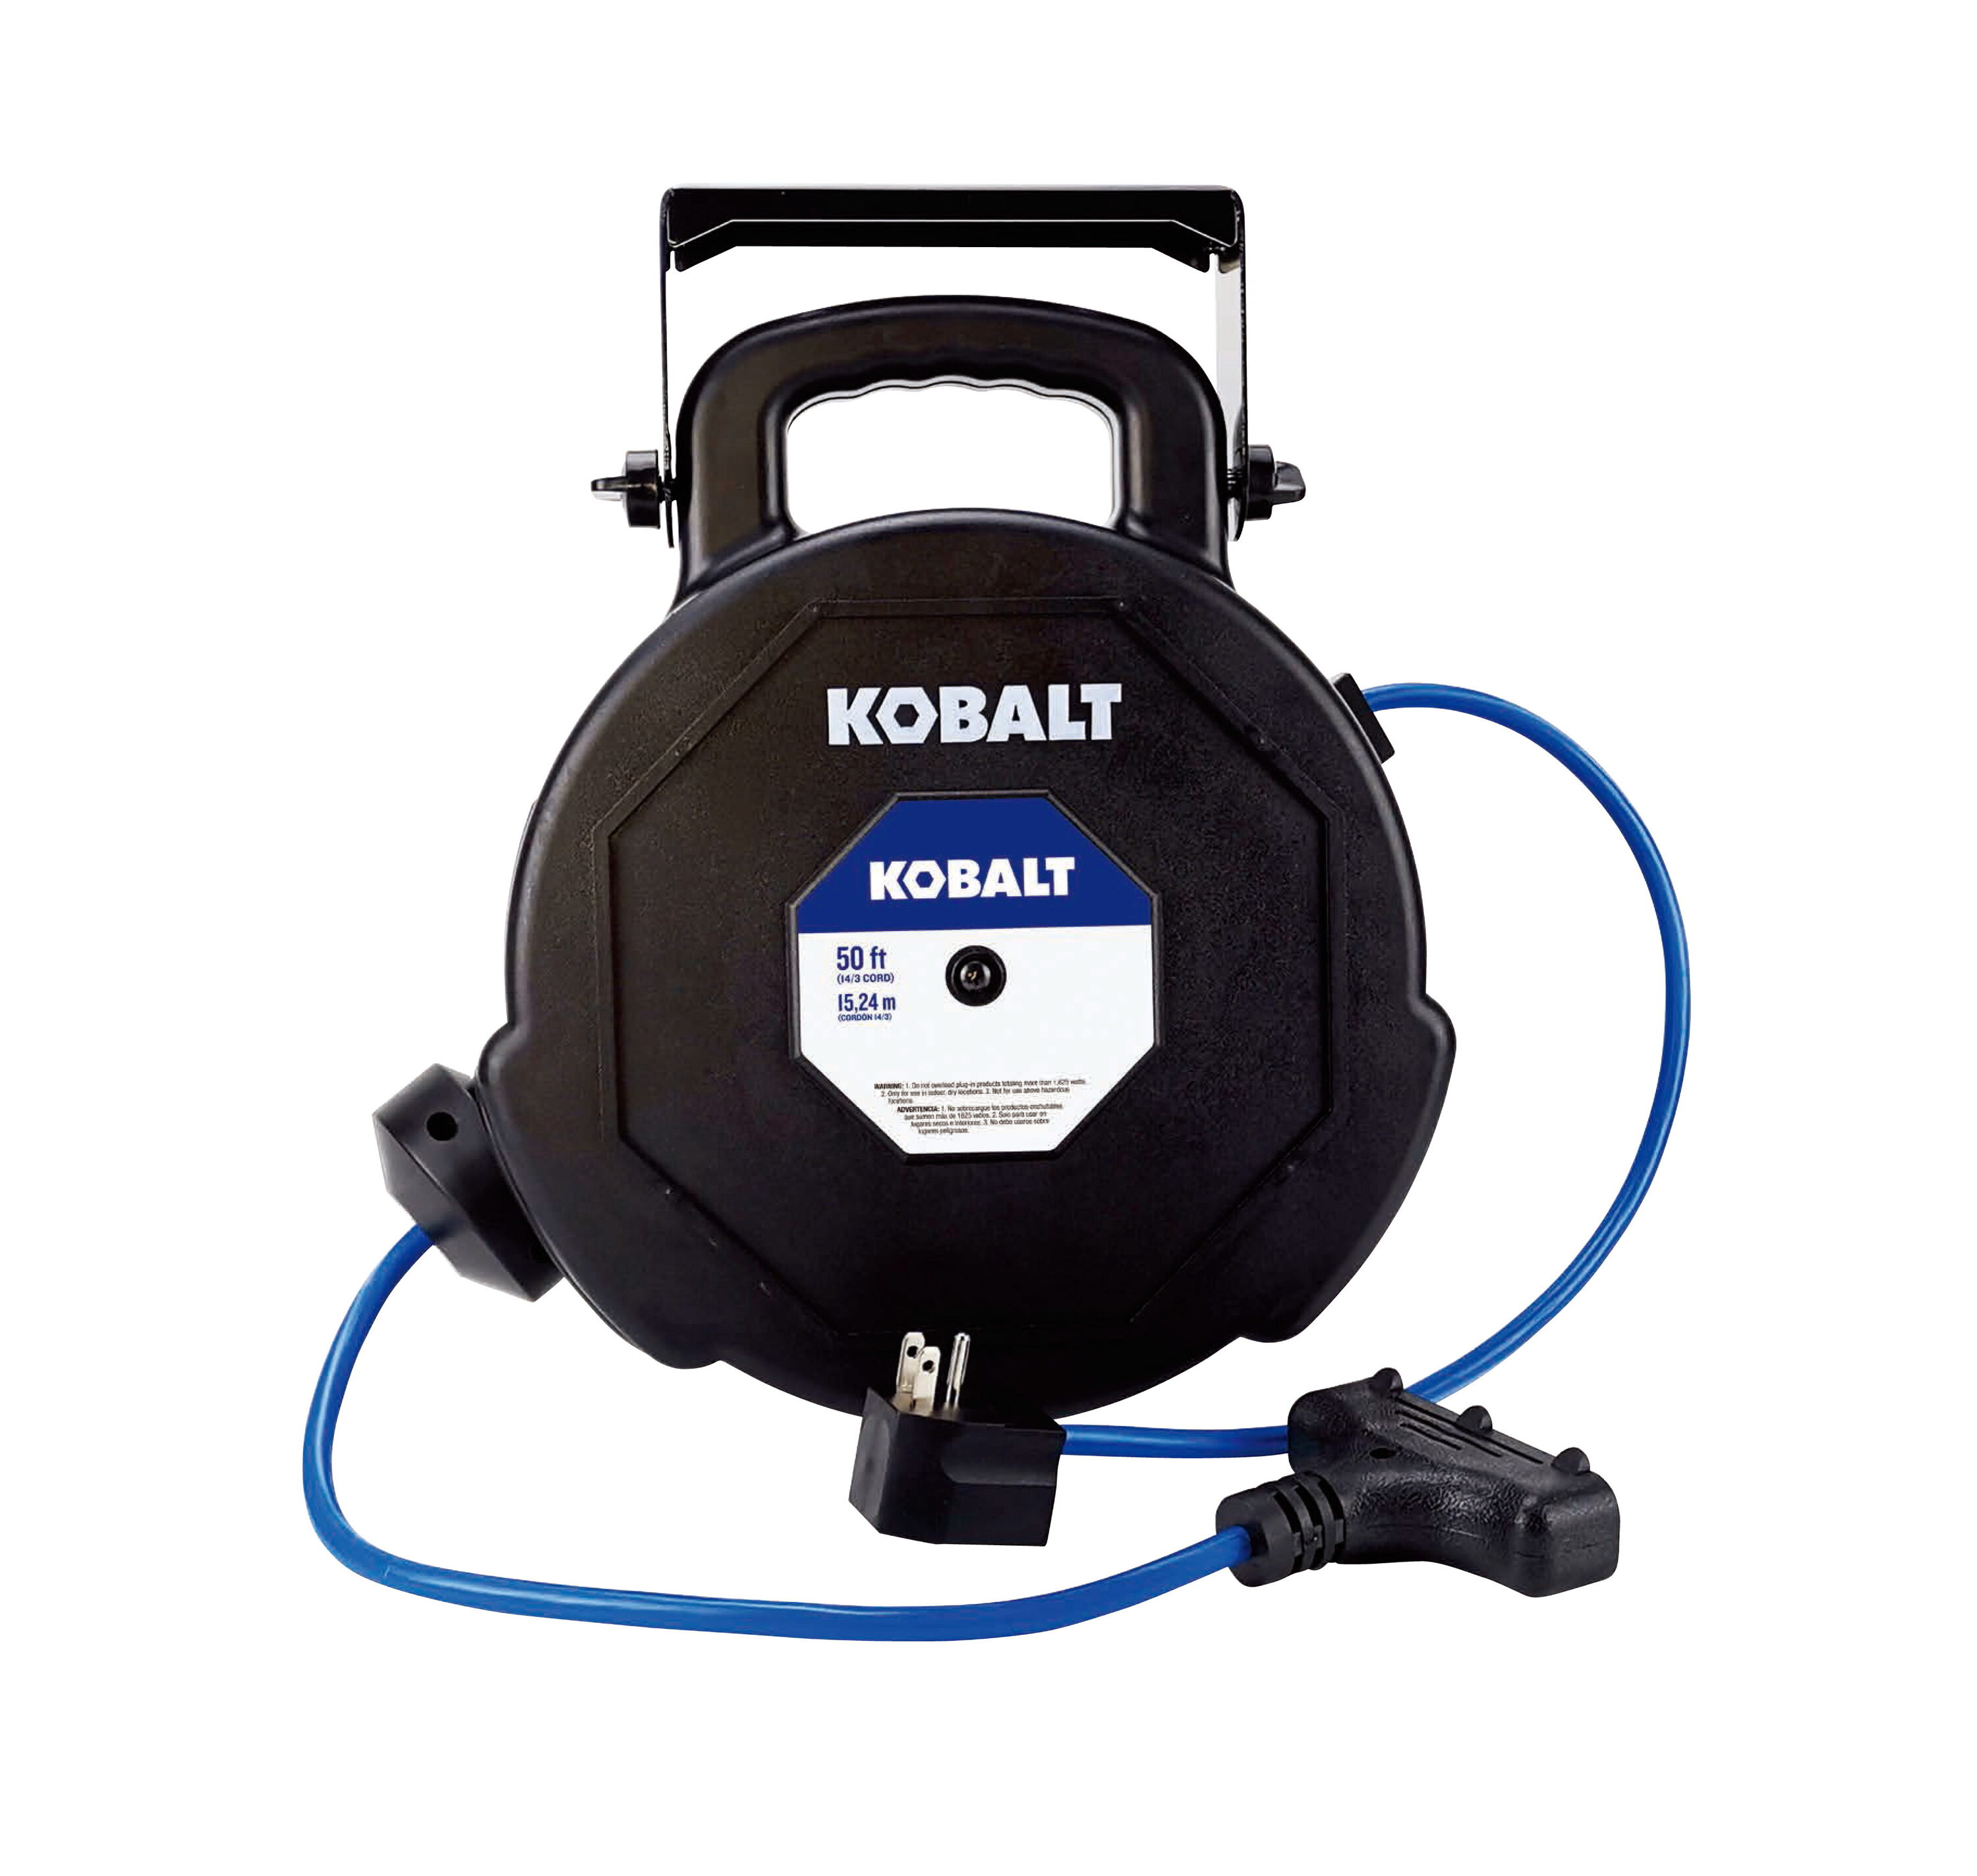 Kobalt Extension Cords & Surge Protectors at